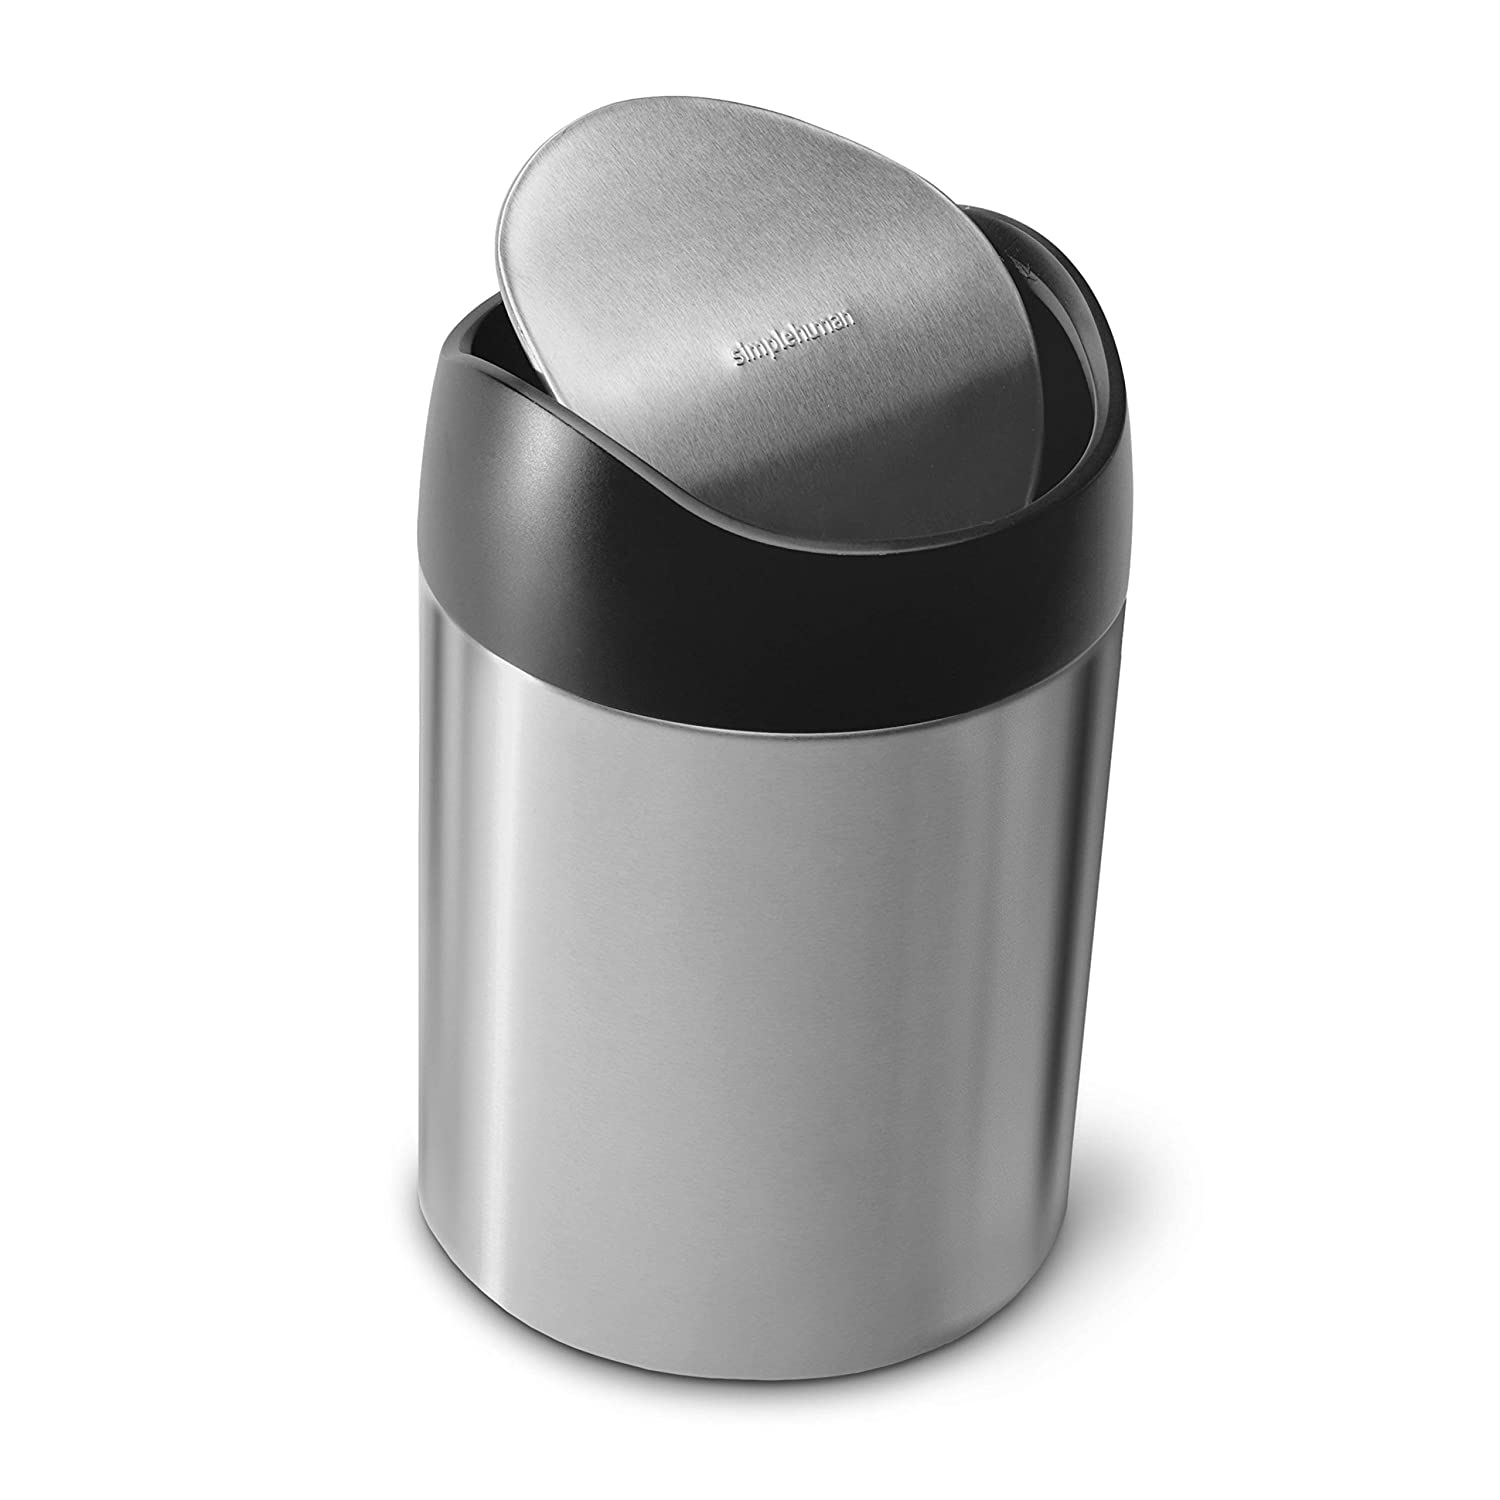  7.  Simplehuman 1.5 Liters Countertop Mini Trash Cans 